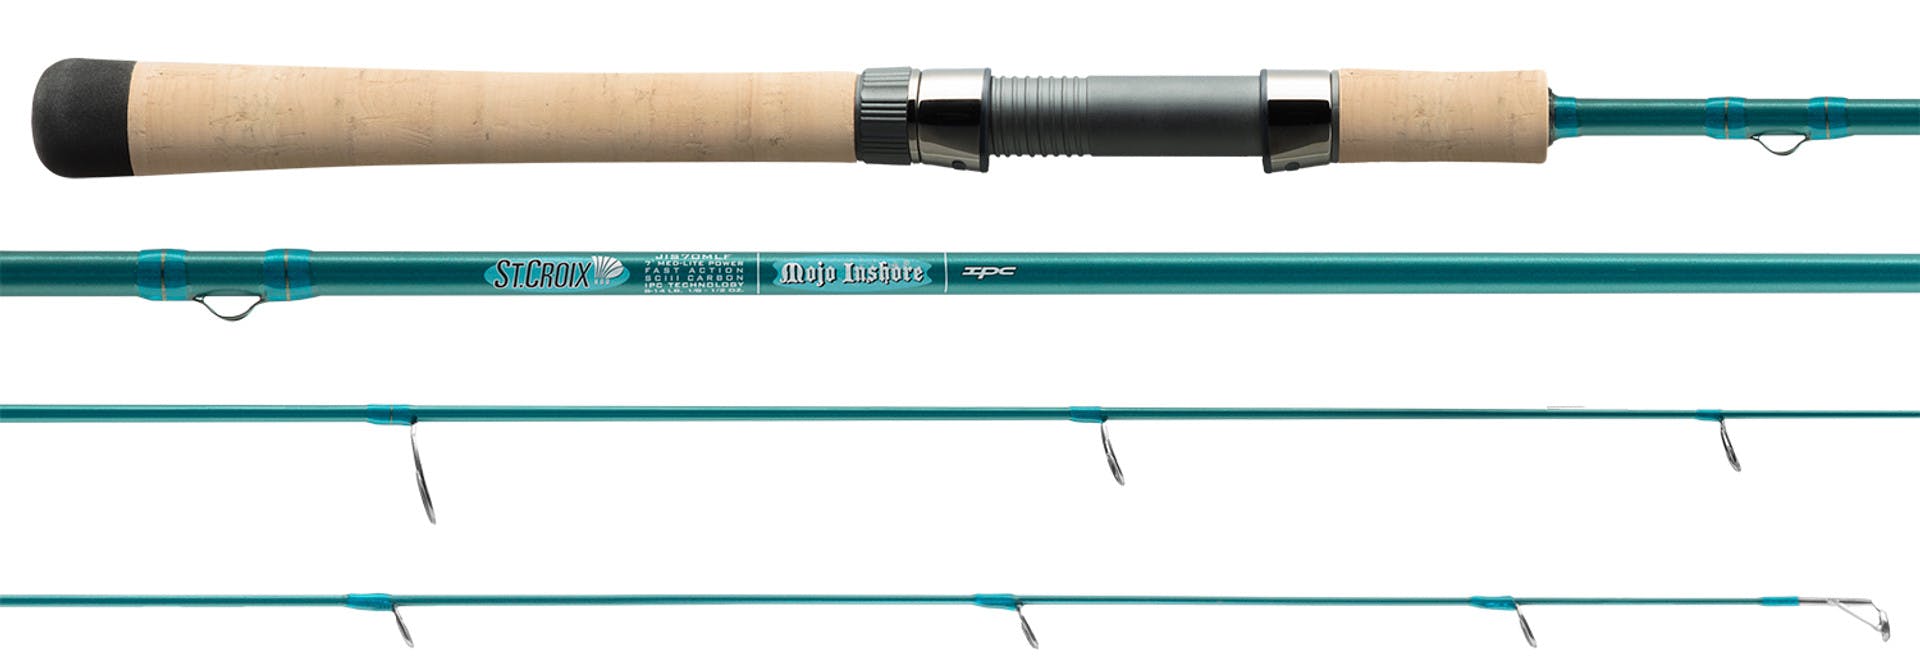 Fenwick Elite Tech Bass vs Mojo Bass - Fishing Rods, Reels, Line, and Knots  - Bass Fishing Forums